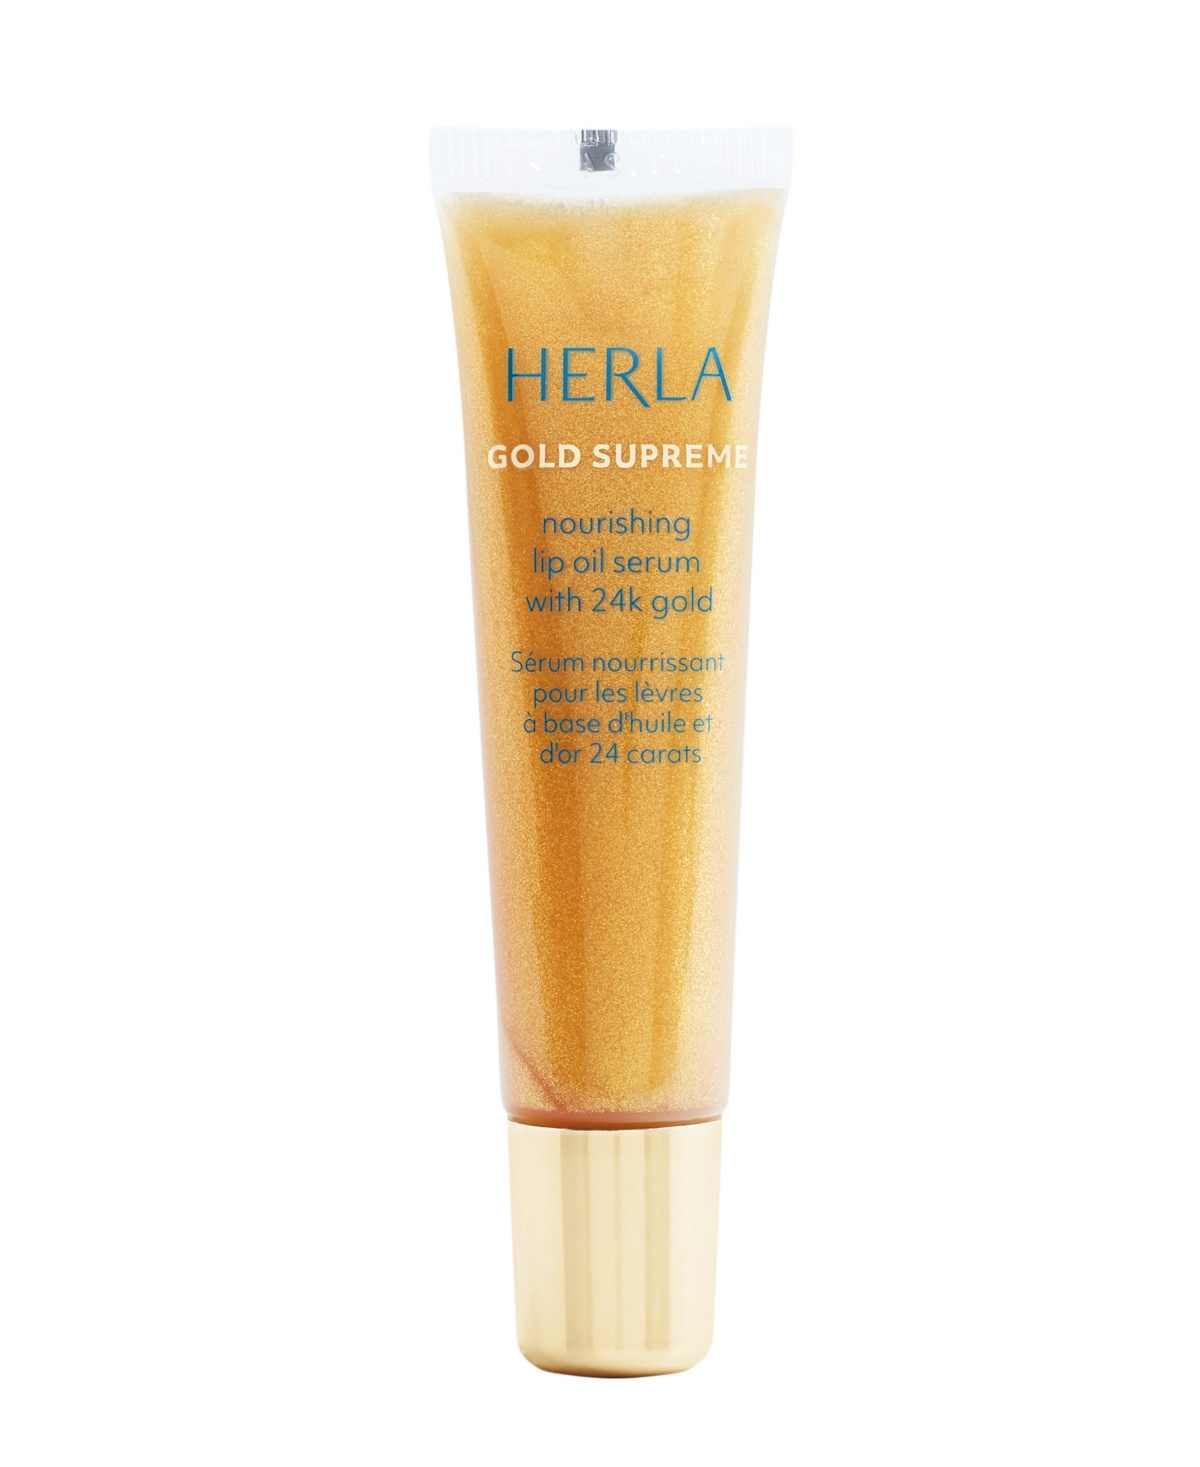 Herla Gold Supreme Nourishing Lip Oil Serum with 24K Gold, 0.51 oz